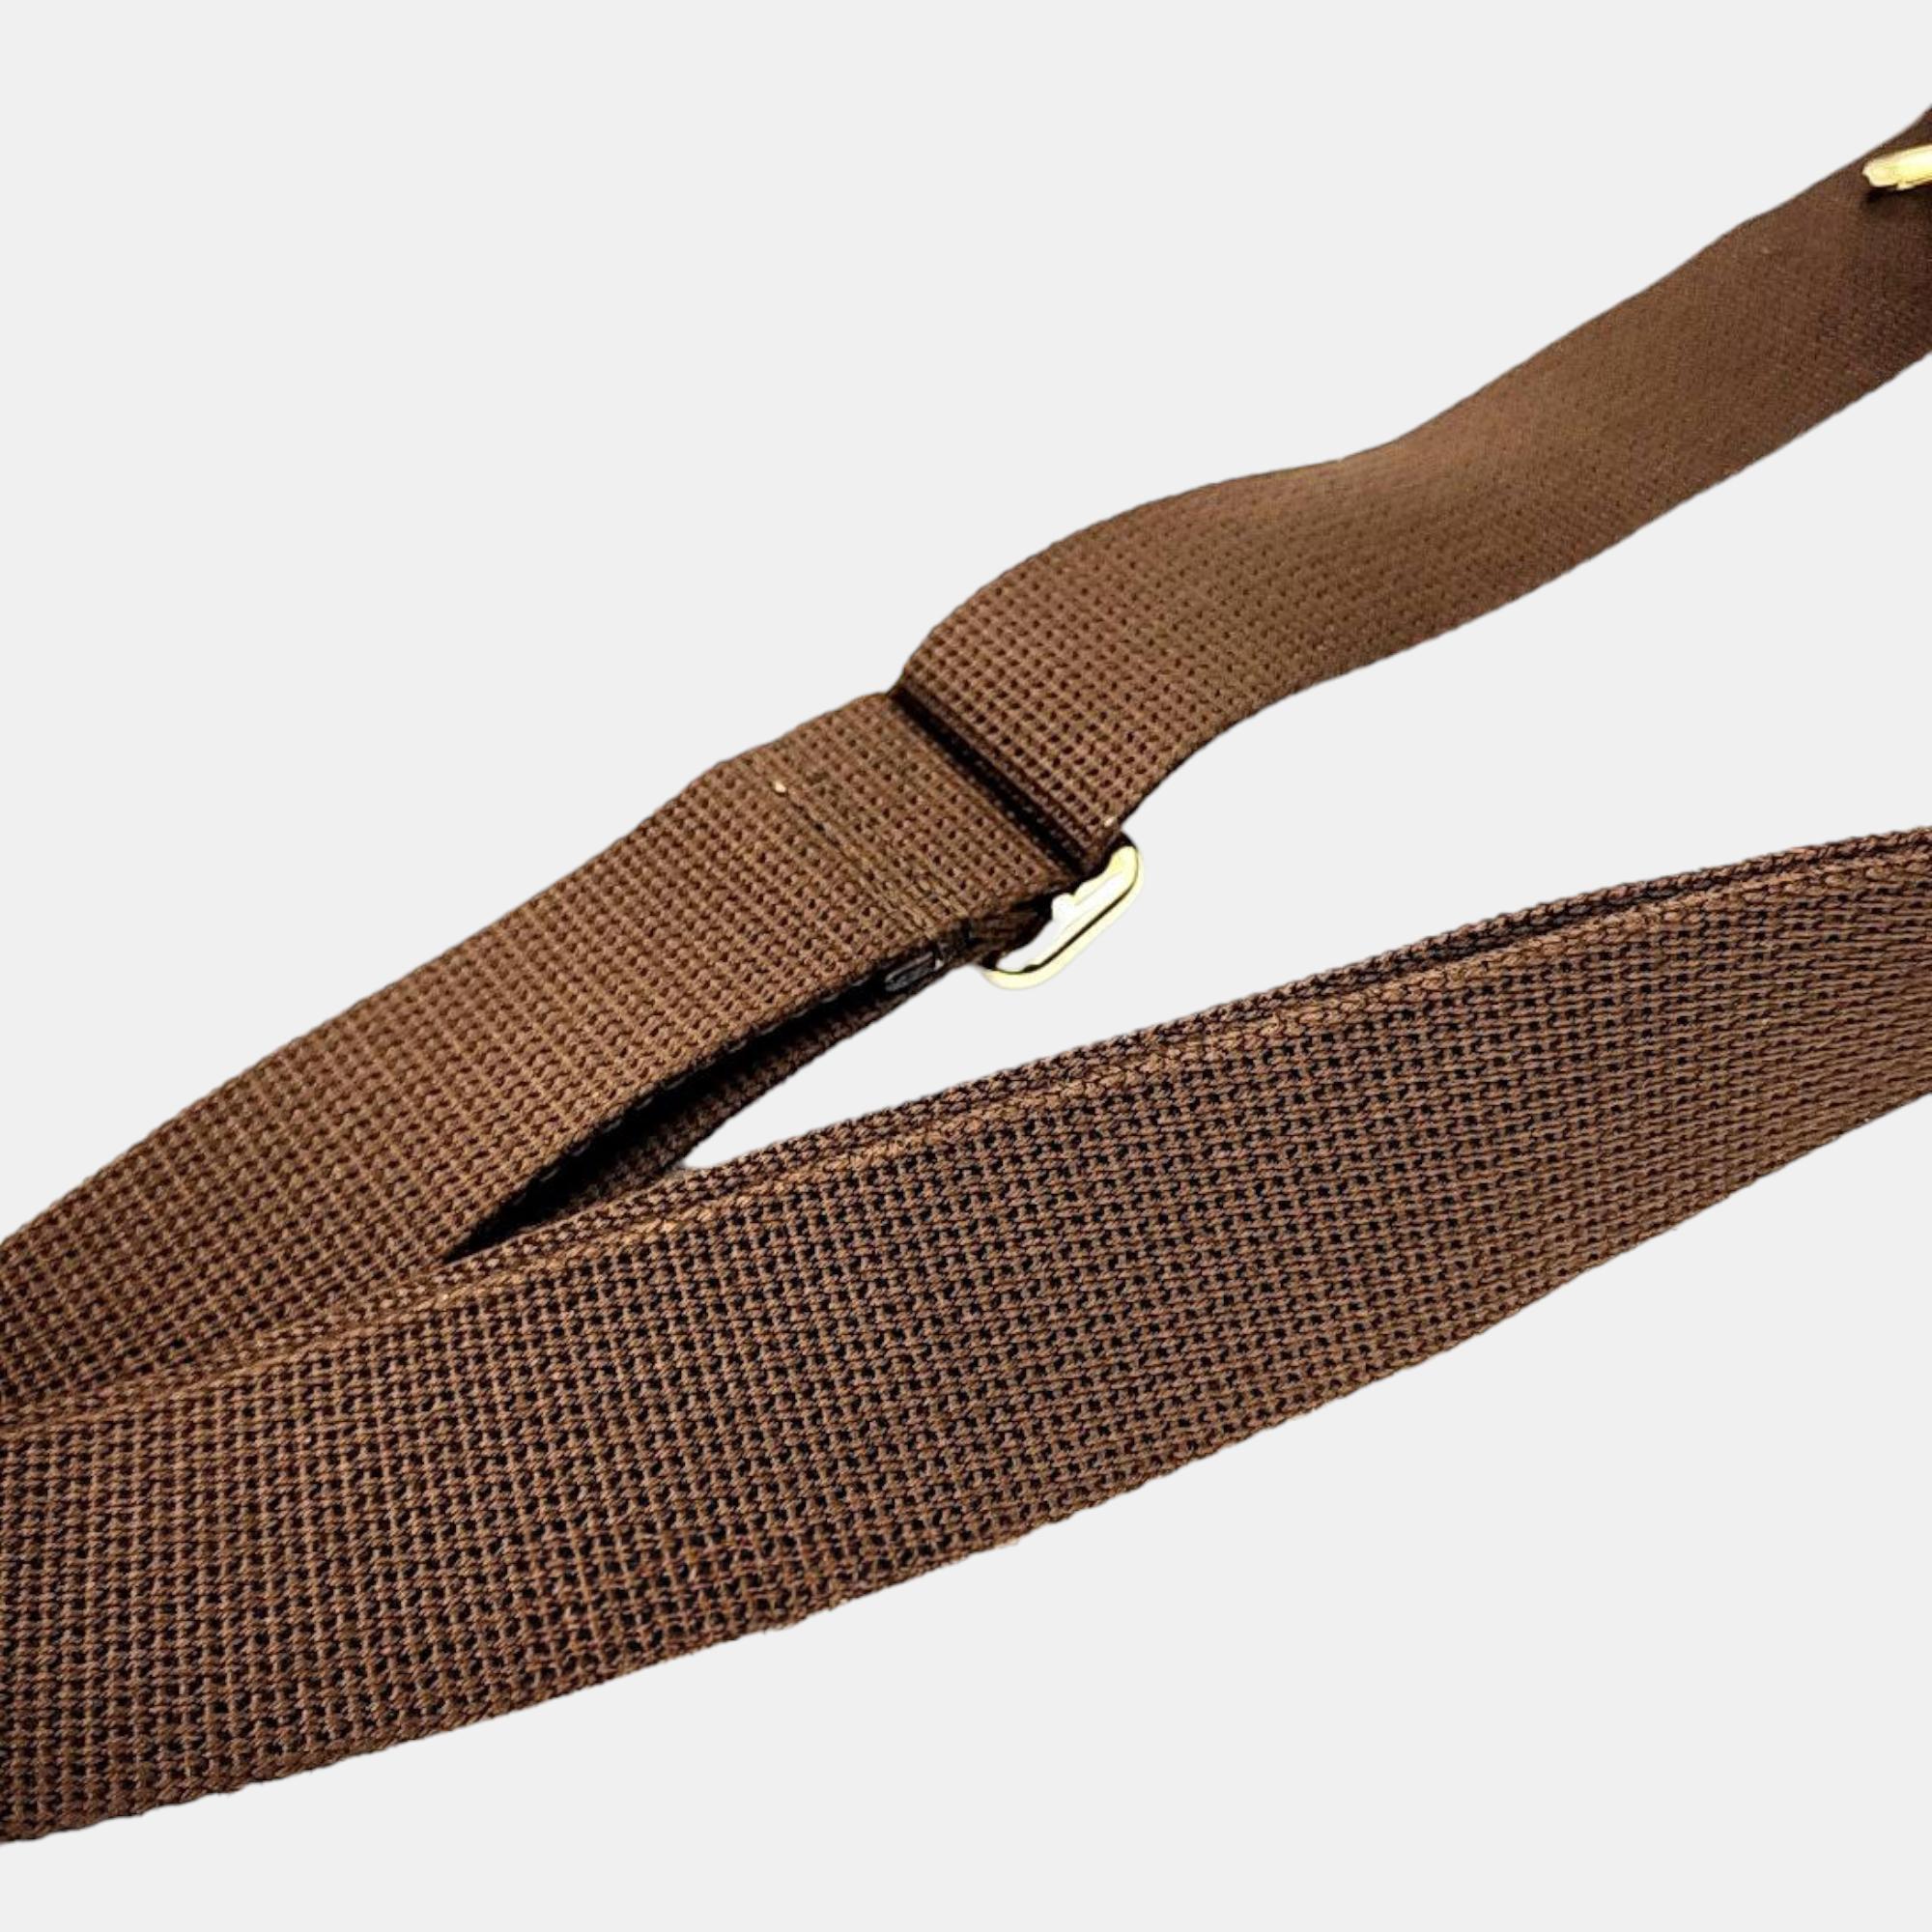 Gucci GG Supreme Interlocking Belt Bag (682933)